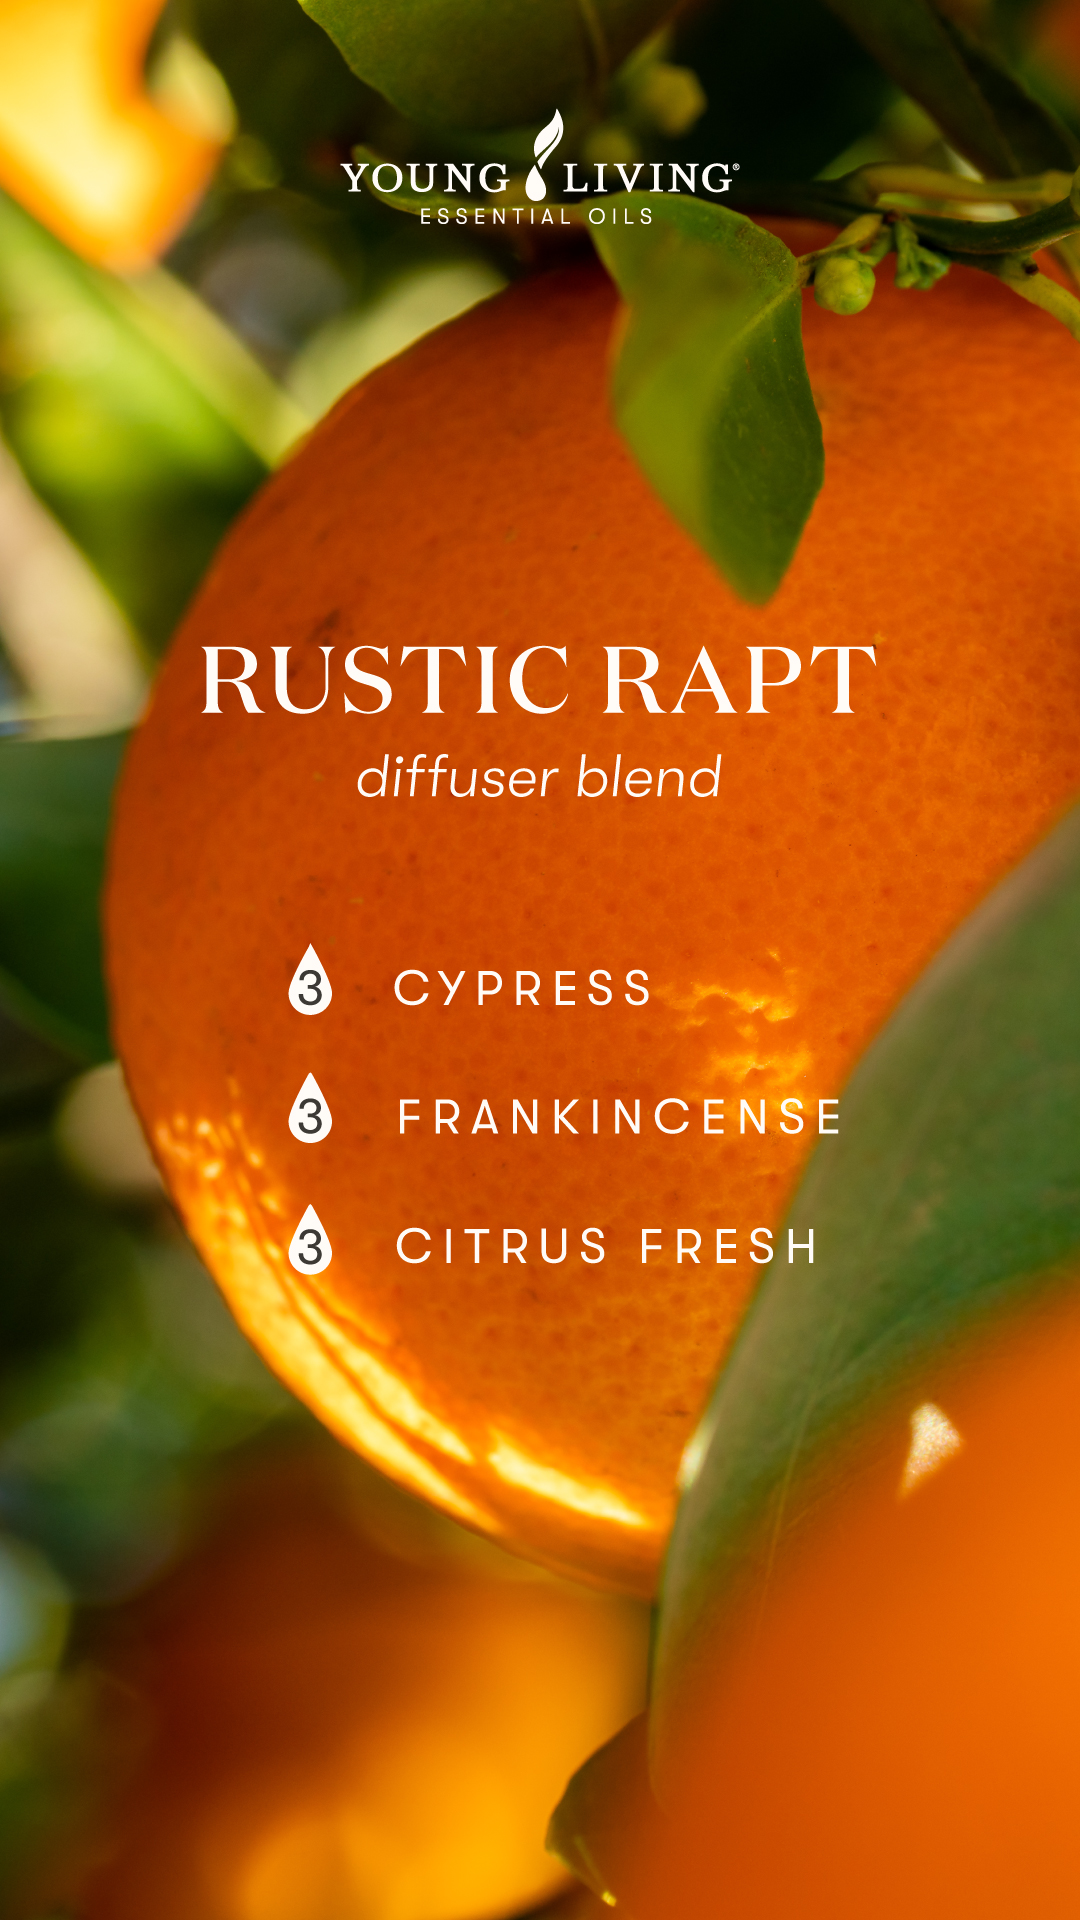 Rustic Rapt diffuser blend - Young Living Lavender Life Blog